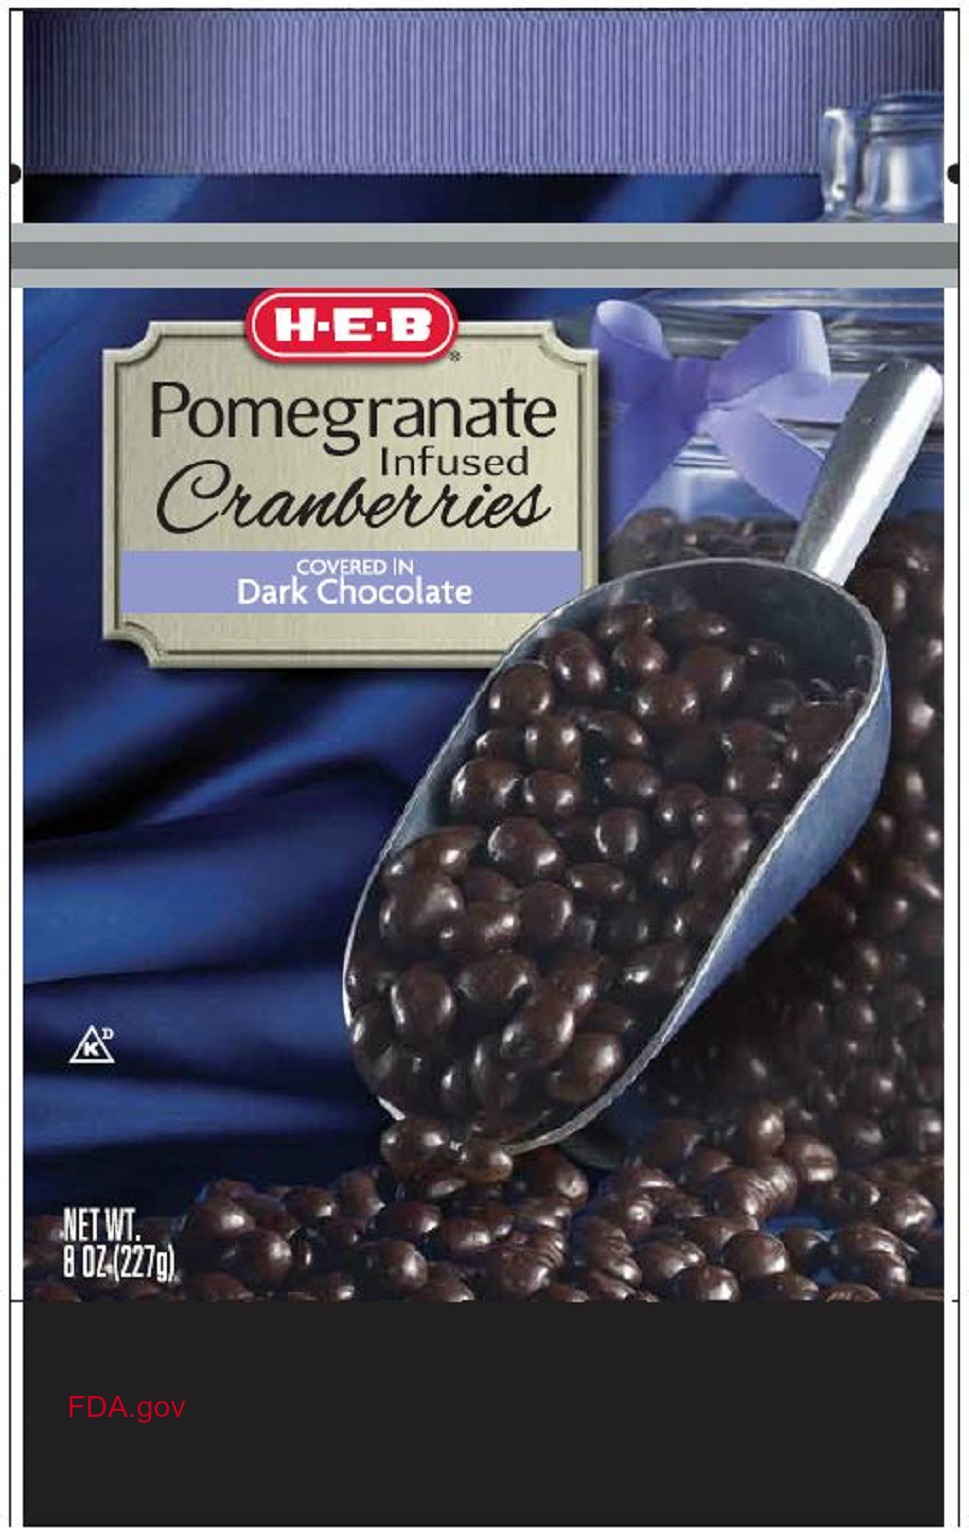 H.E.B chocolate cranberries recall